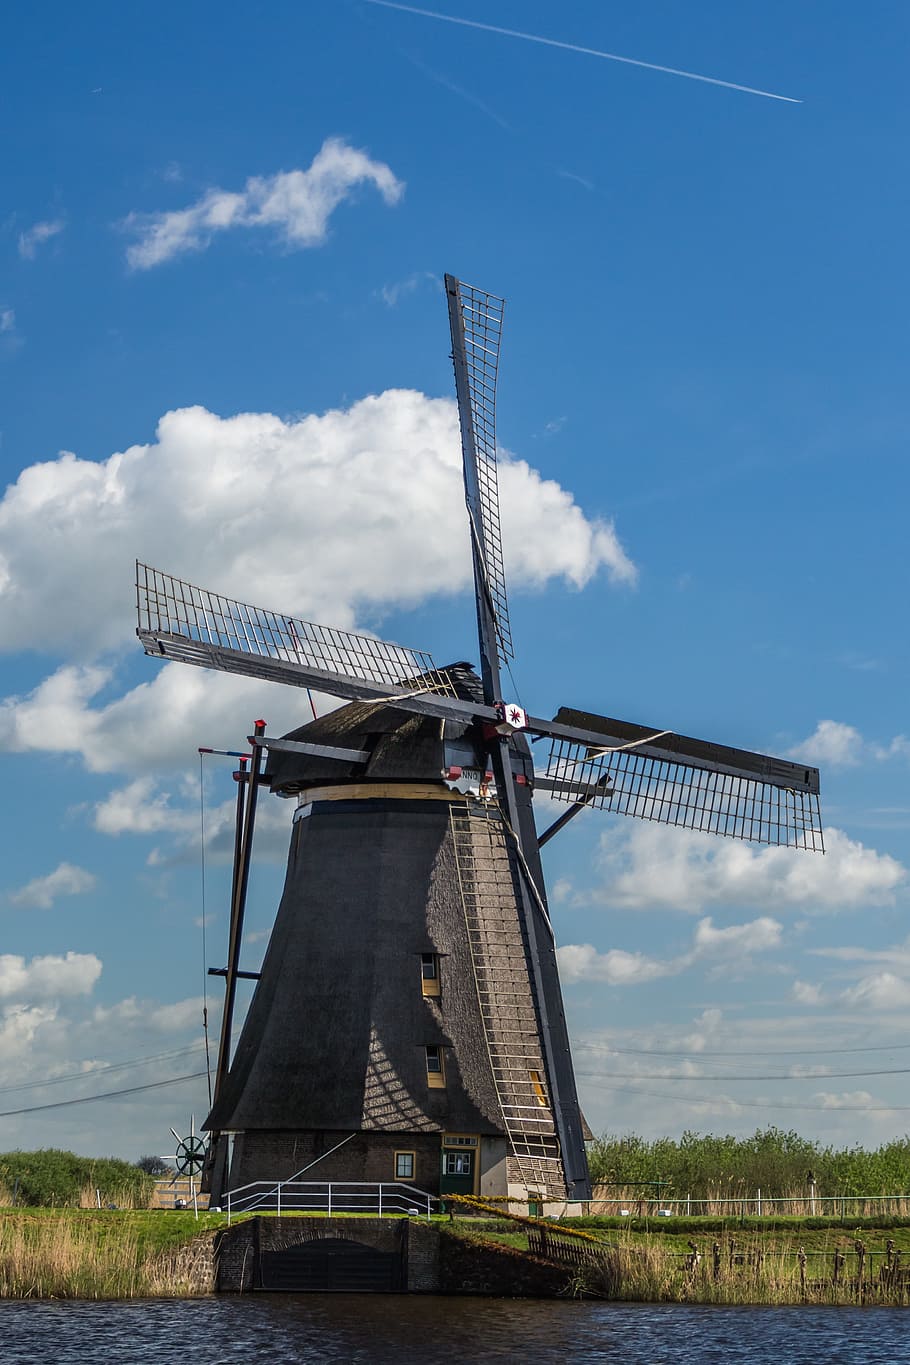 gray windmill near body of water, Netherlands, kinderdijk, alternative energy